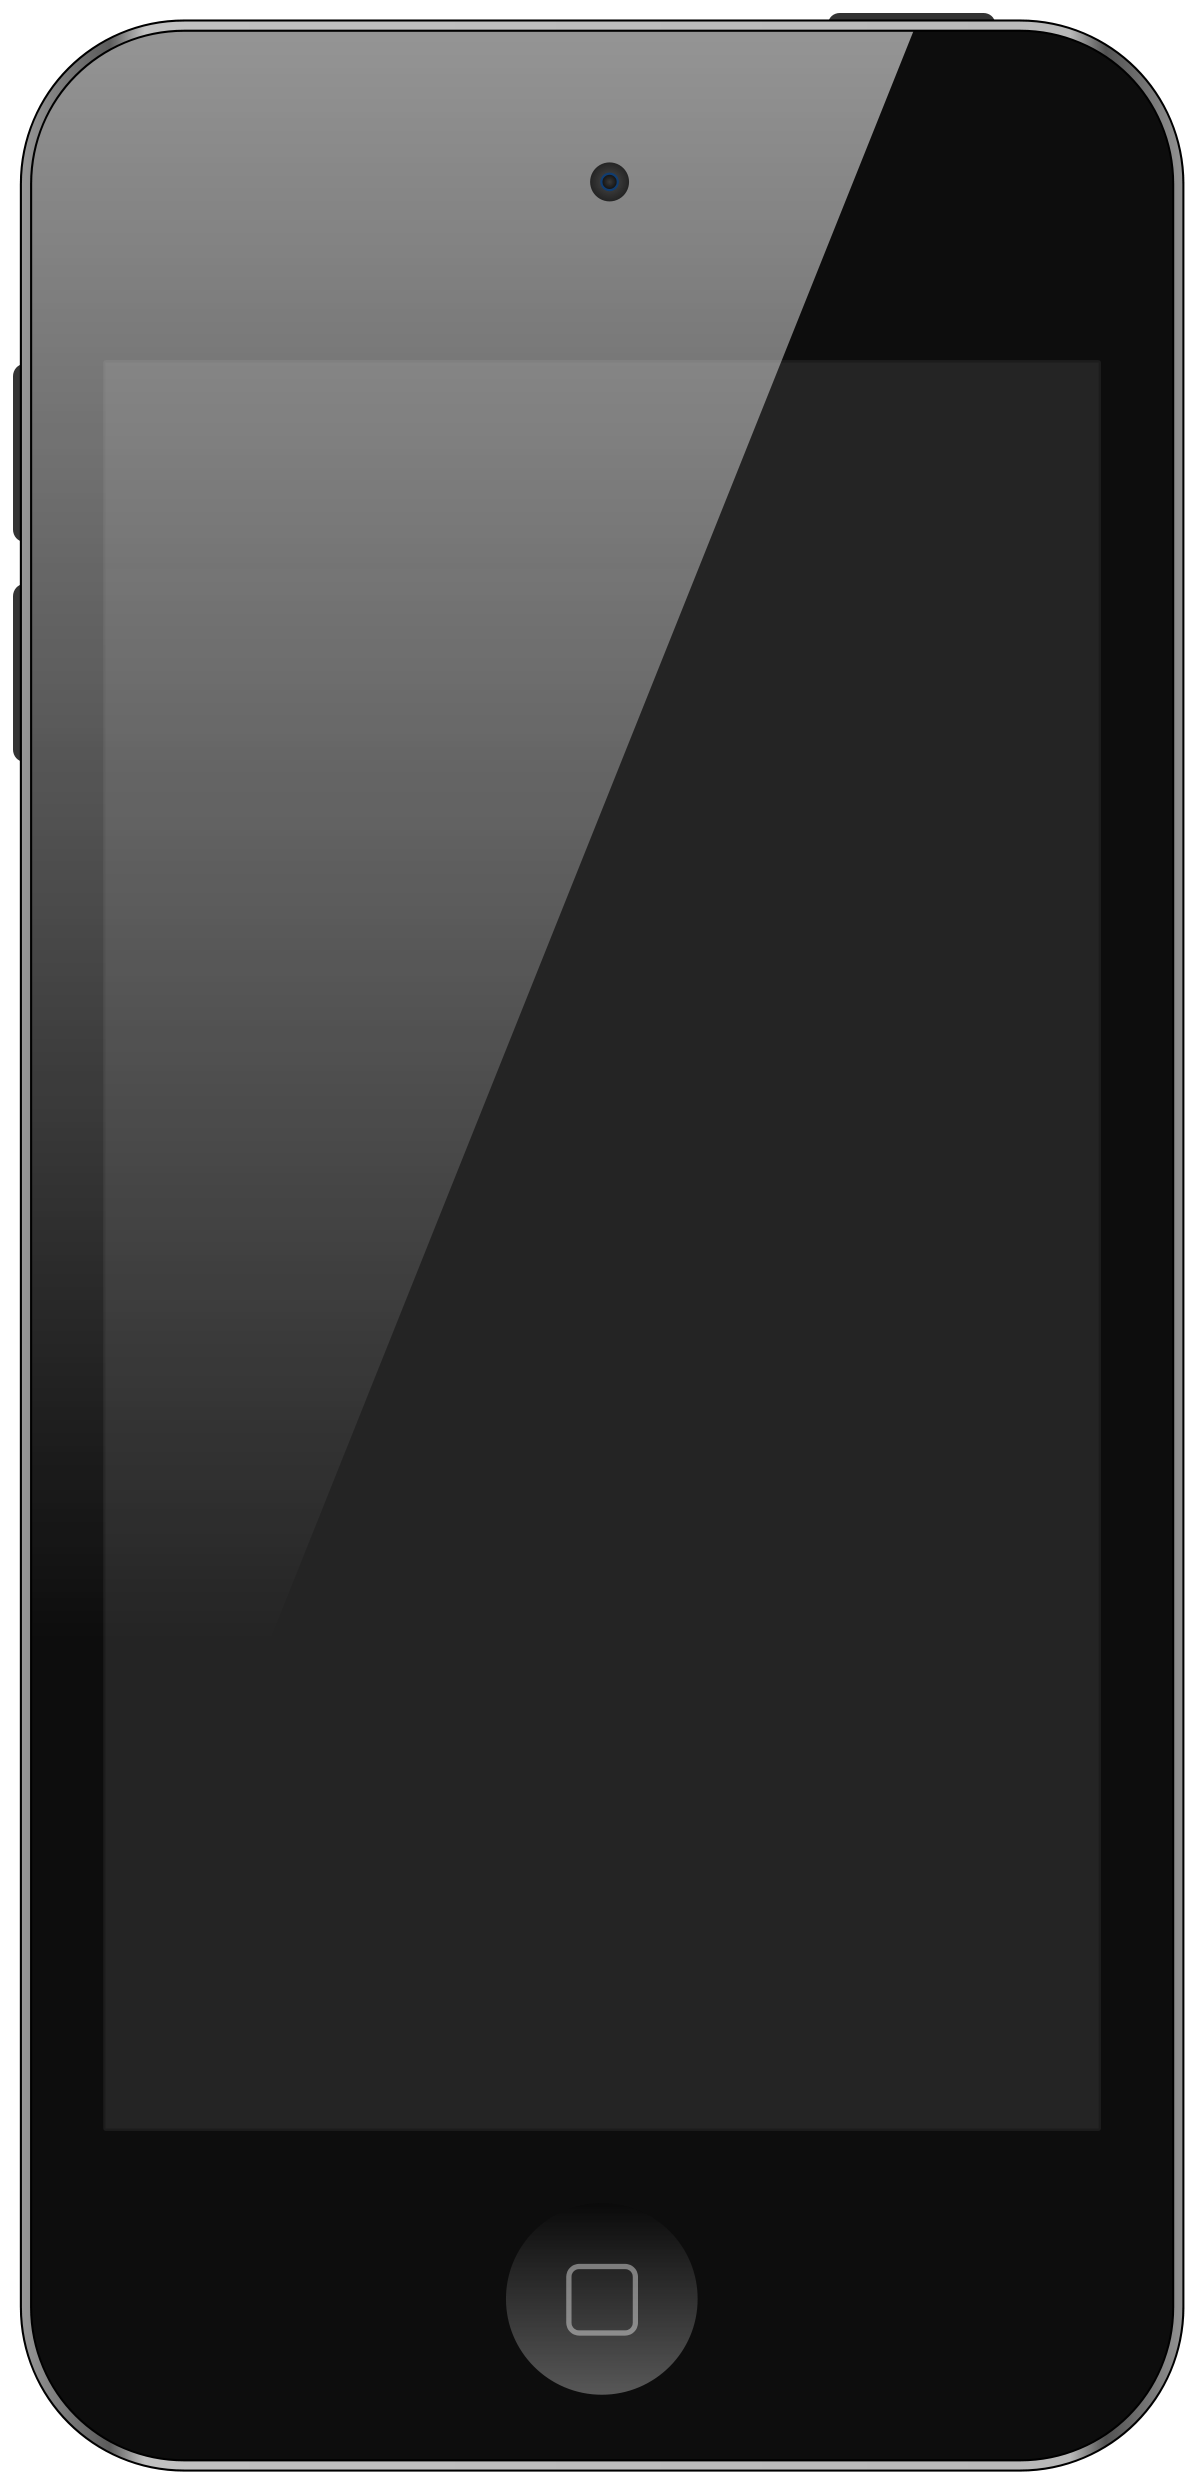 iPod Touch screen display error